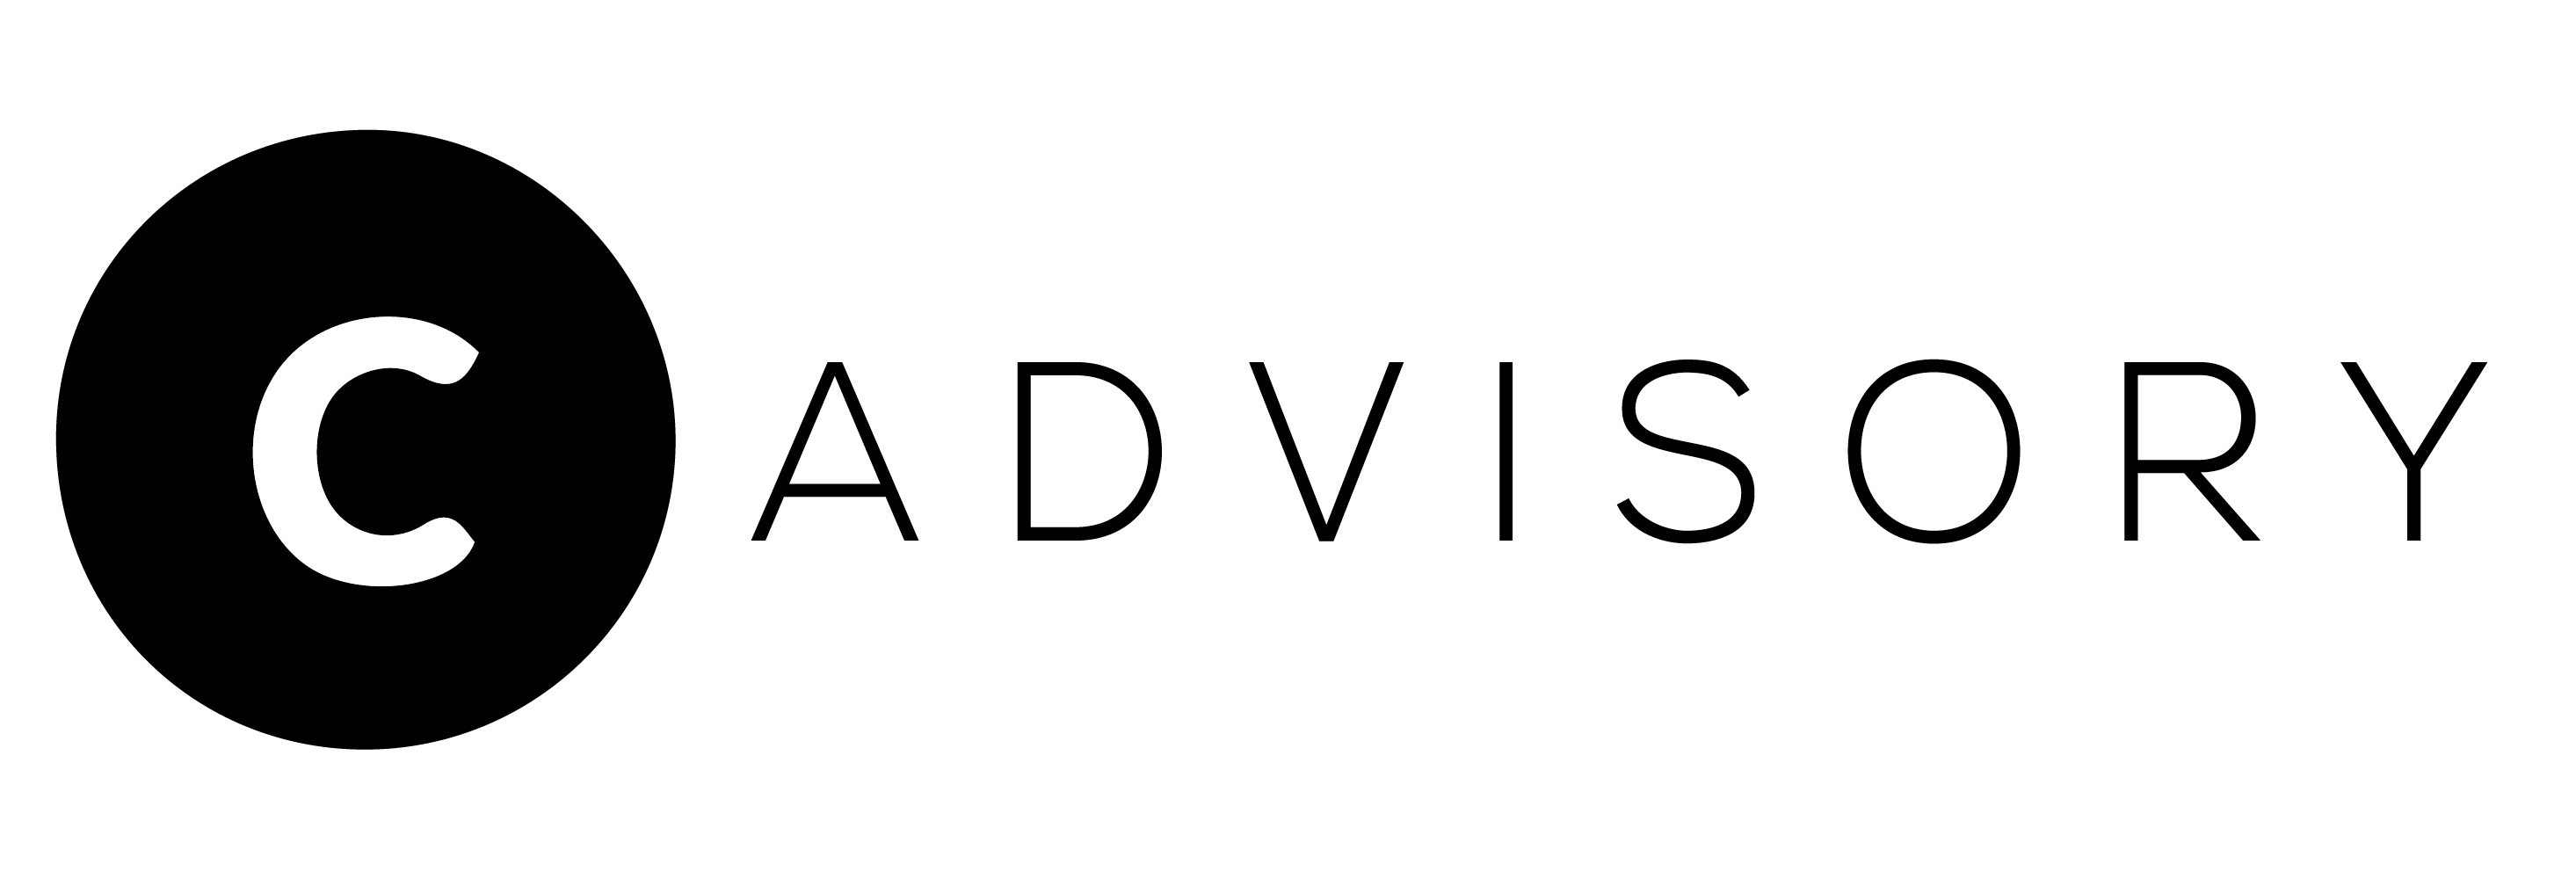 C Advisory Pte. Ltd. logo